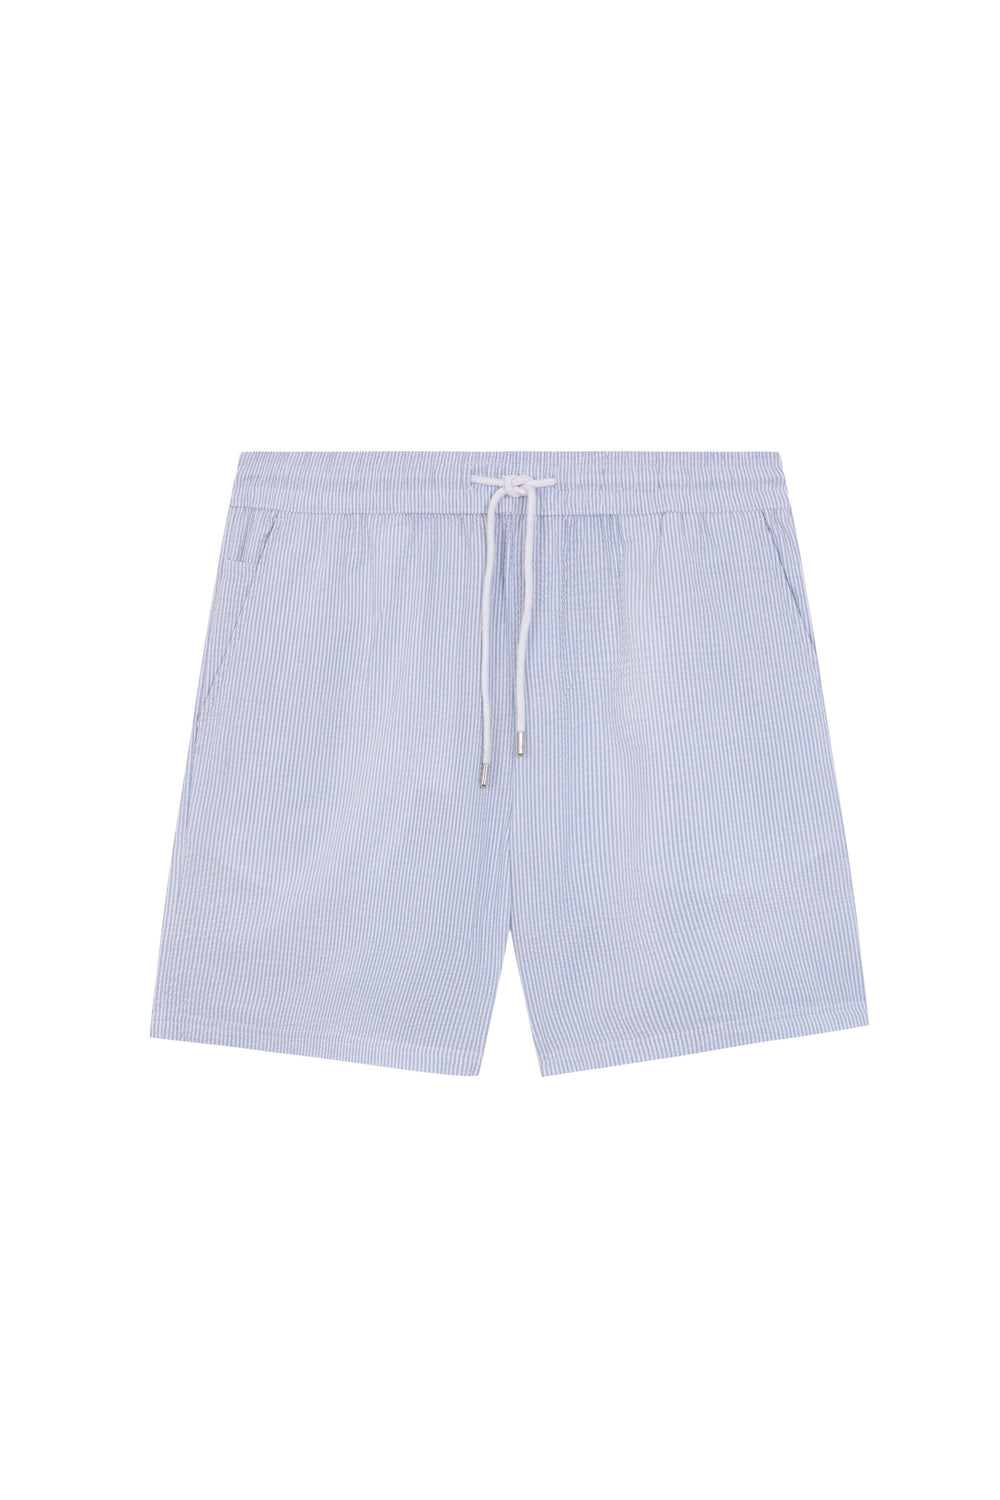 Open Air Seersucker Stripe Shorts